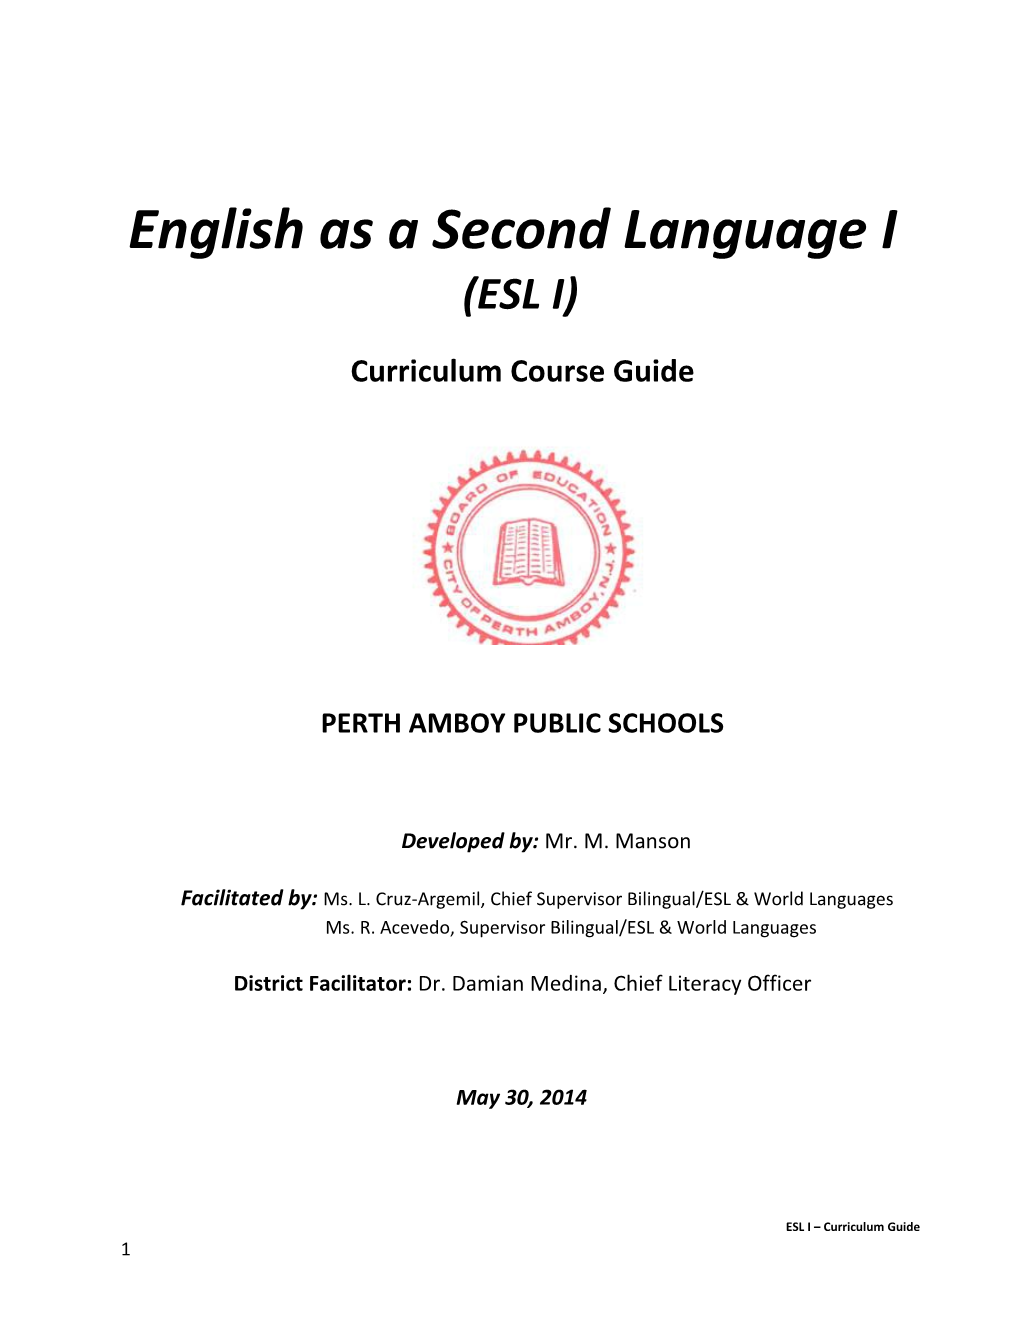 English As a Second Language I